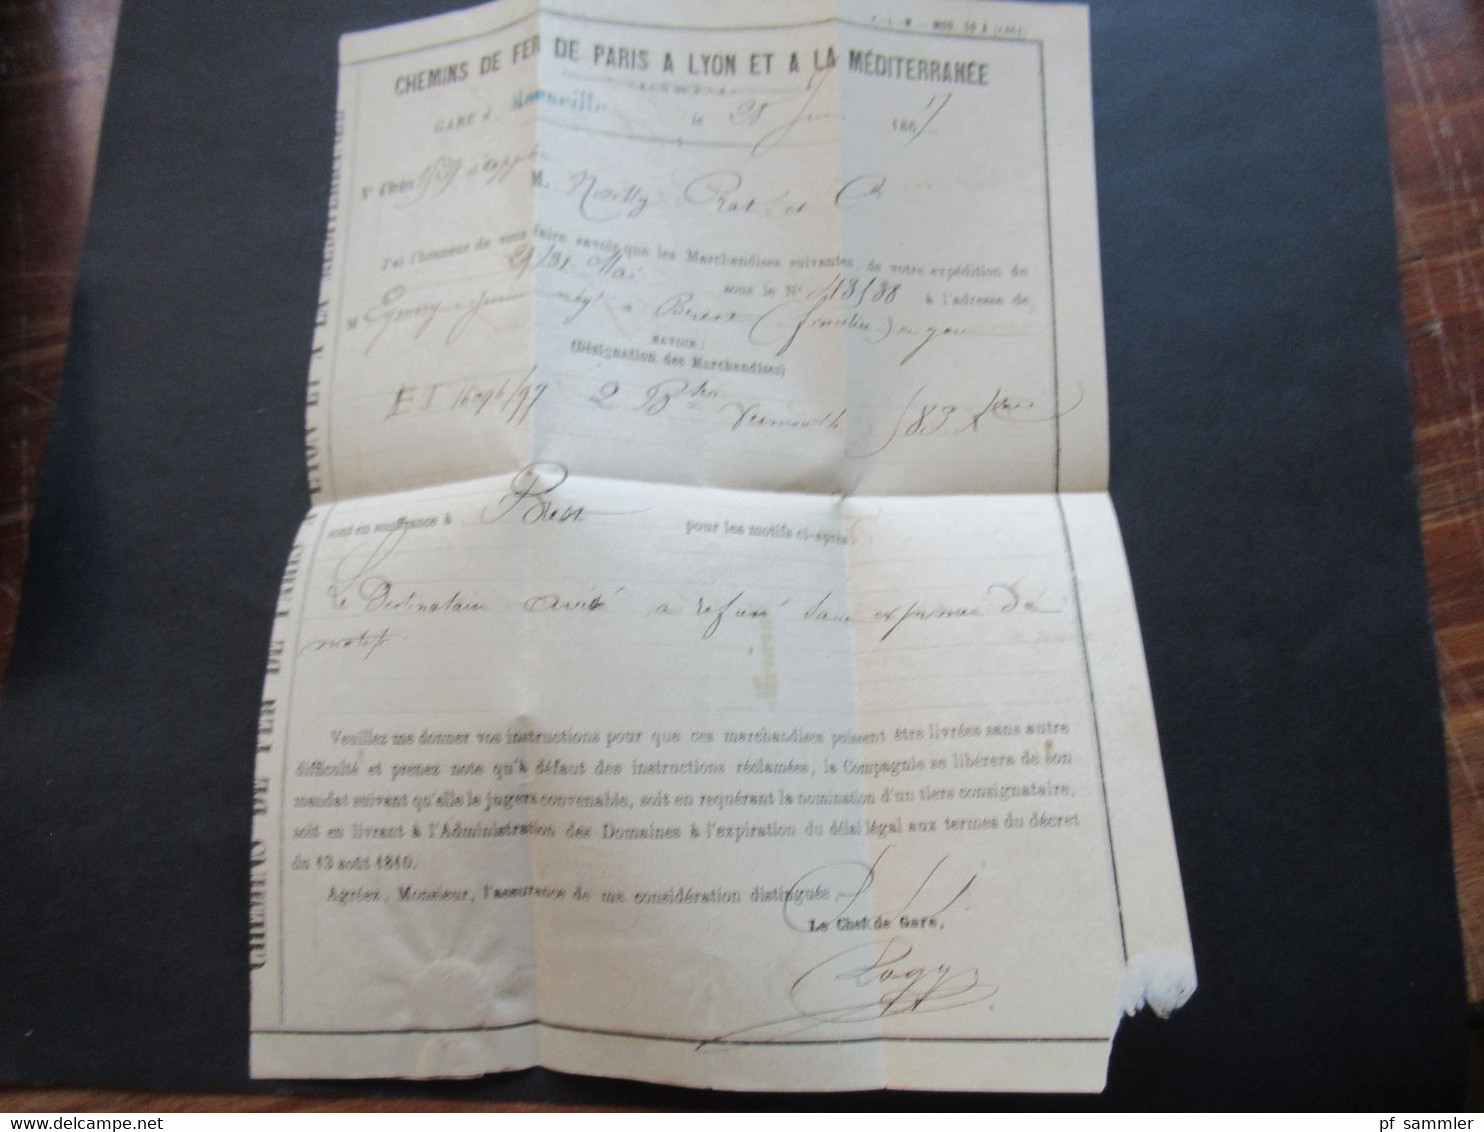 1867 Napoleon III. Nr.20 EF auf gedrucktem Brief Marseille Le Chef de Gare / Cehmins de Fer de Paris blauer L1 Marseile